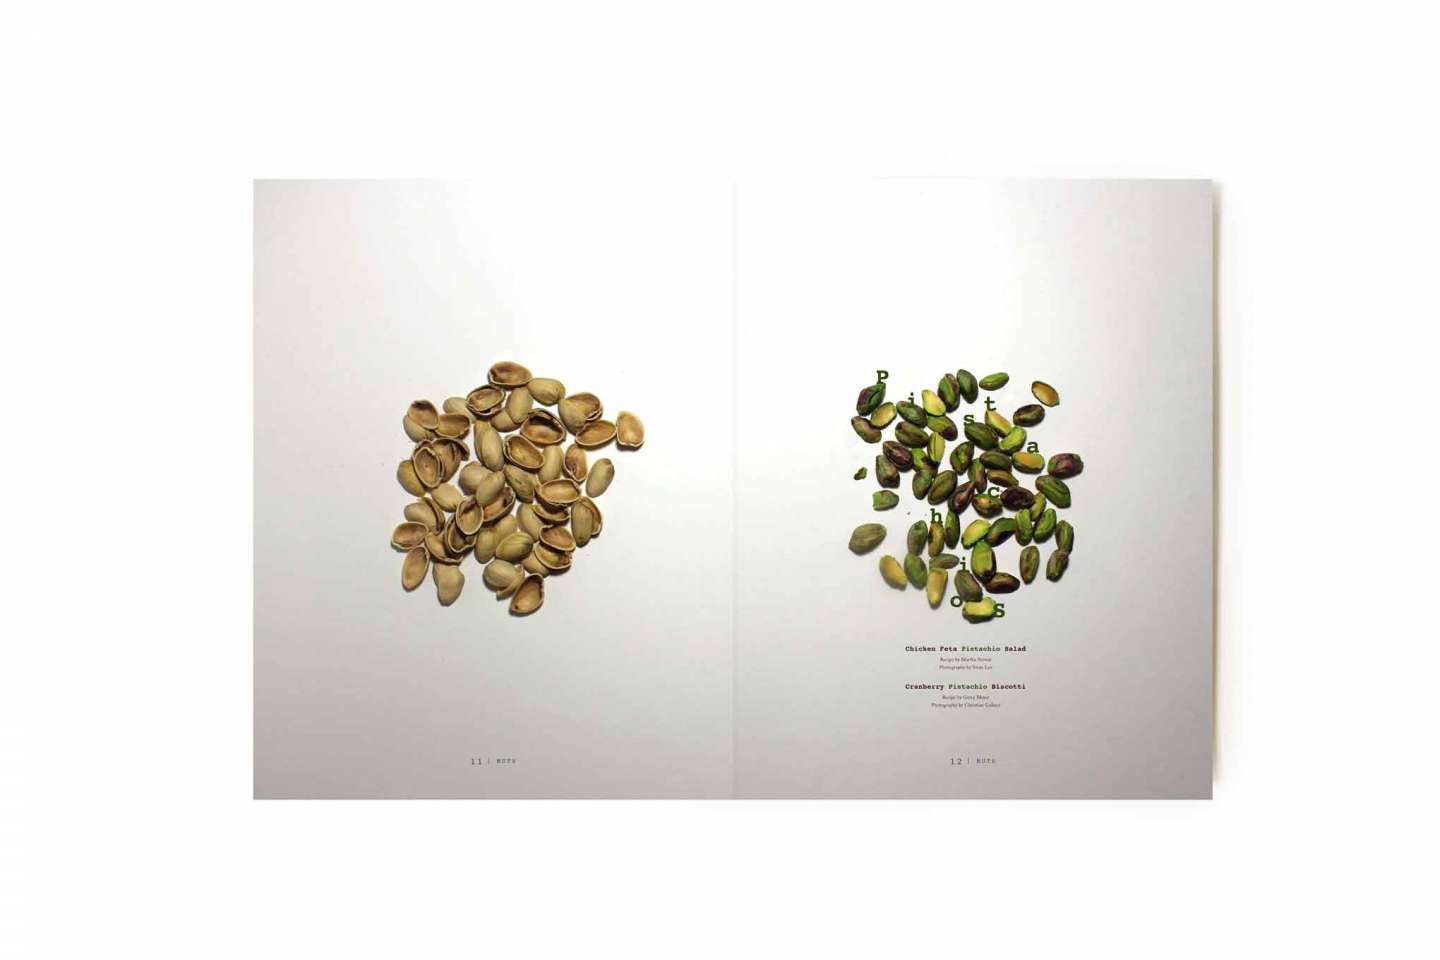 Nuts/Magazine Design